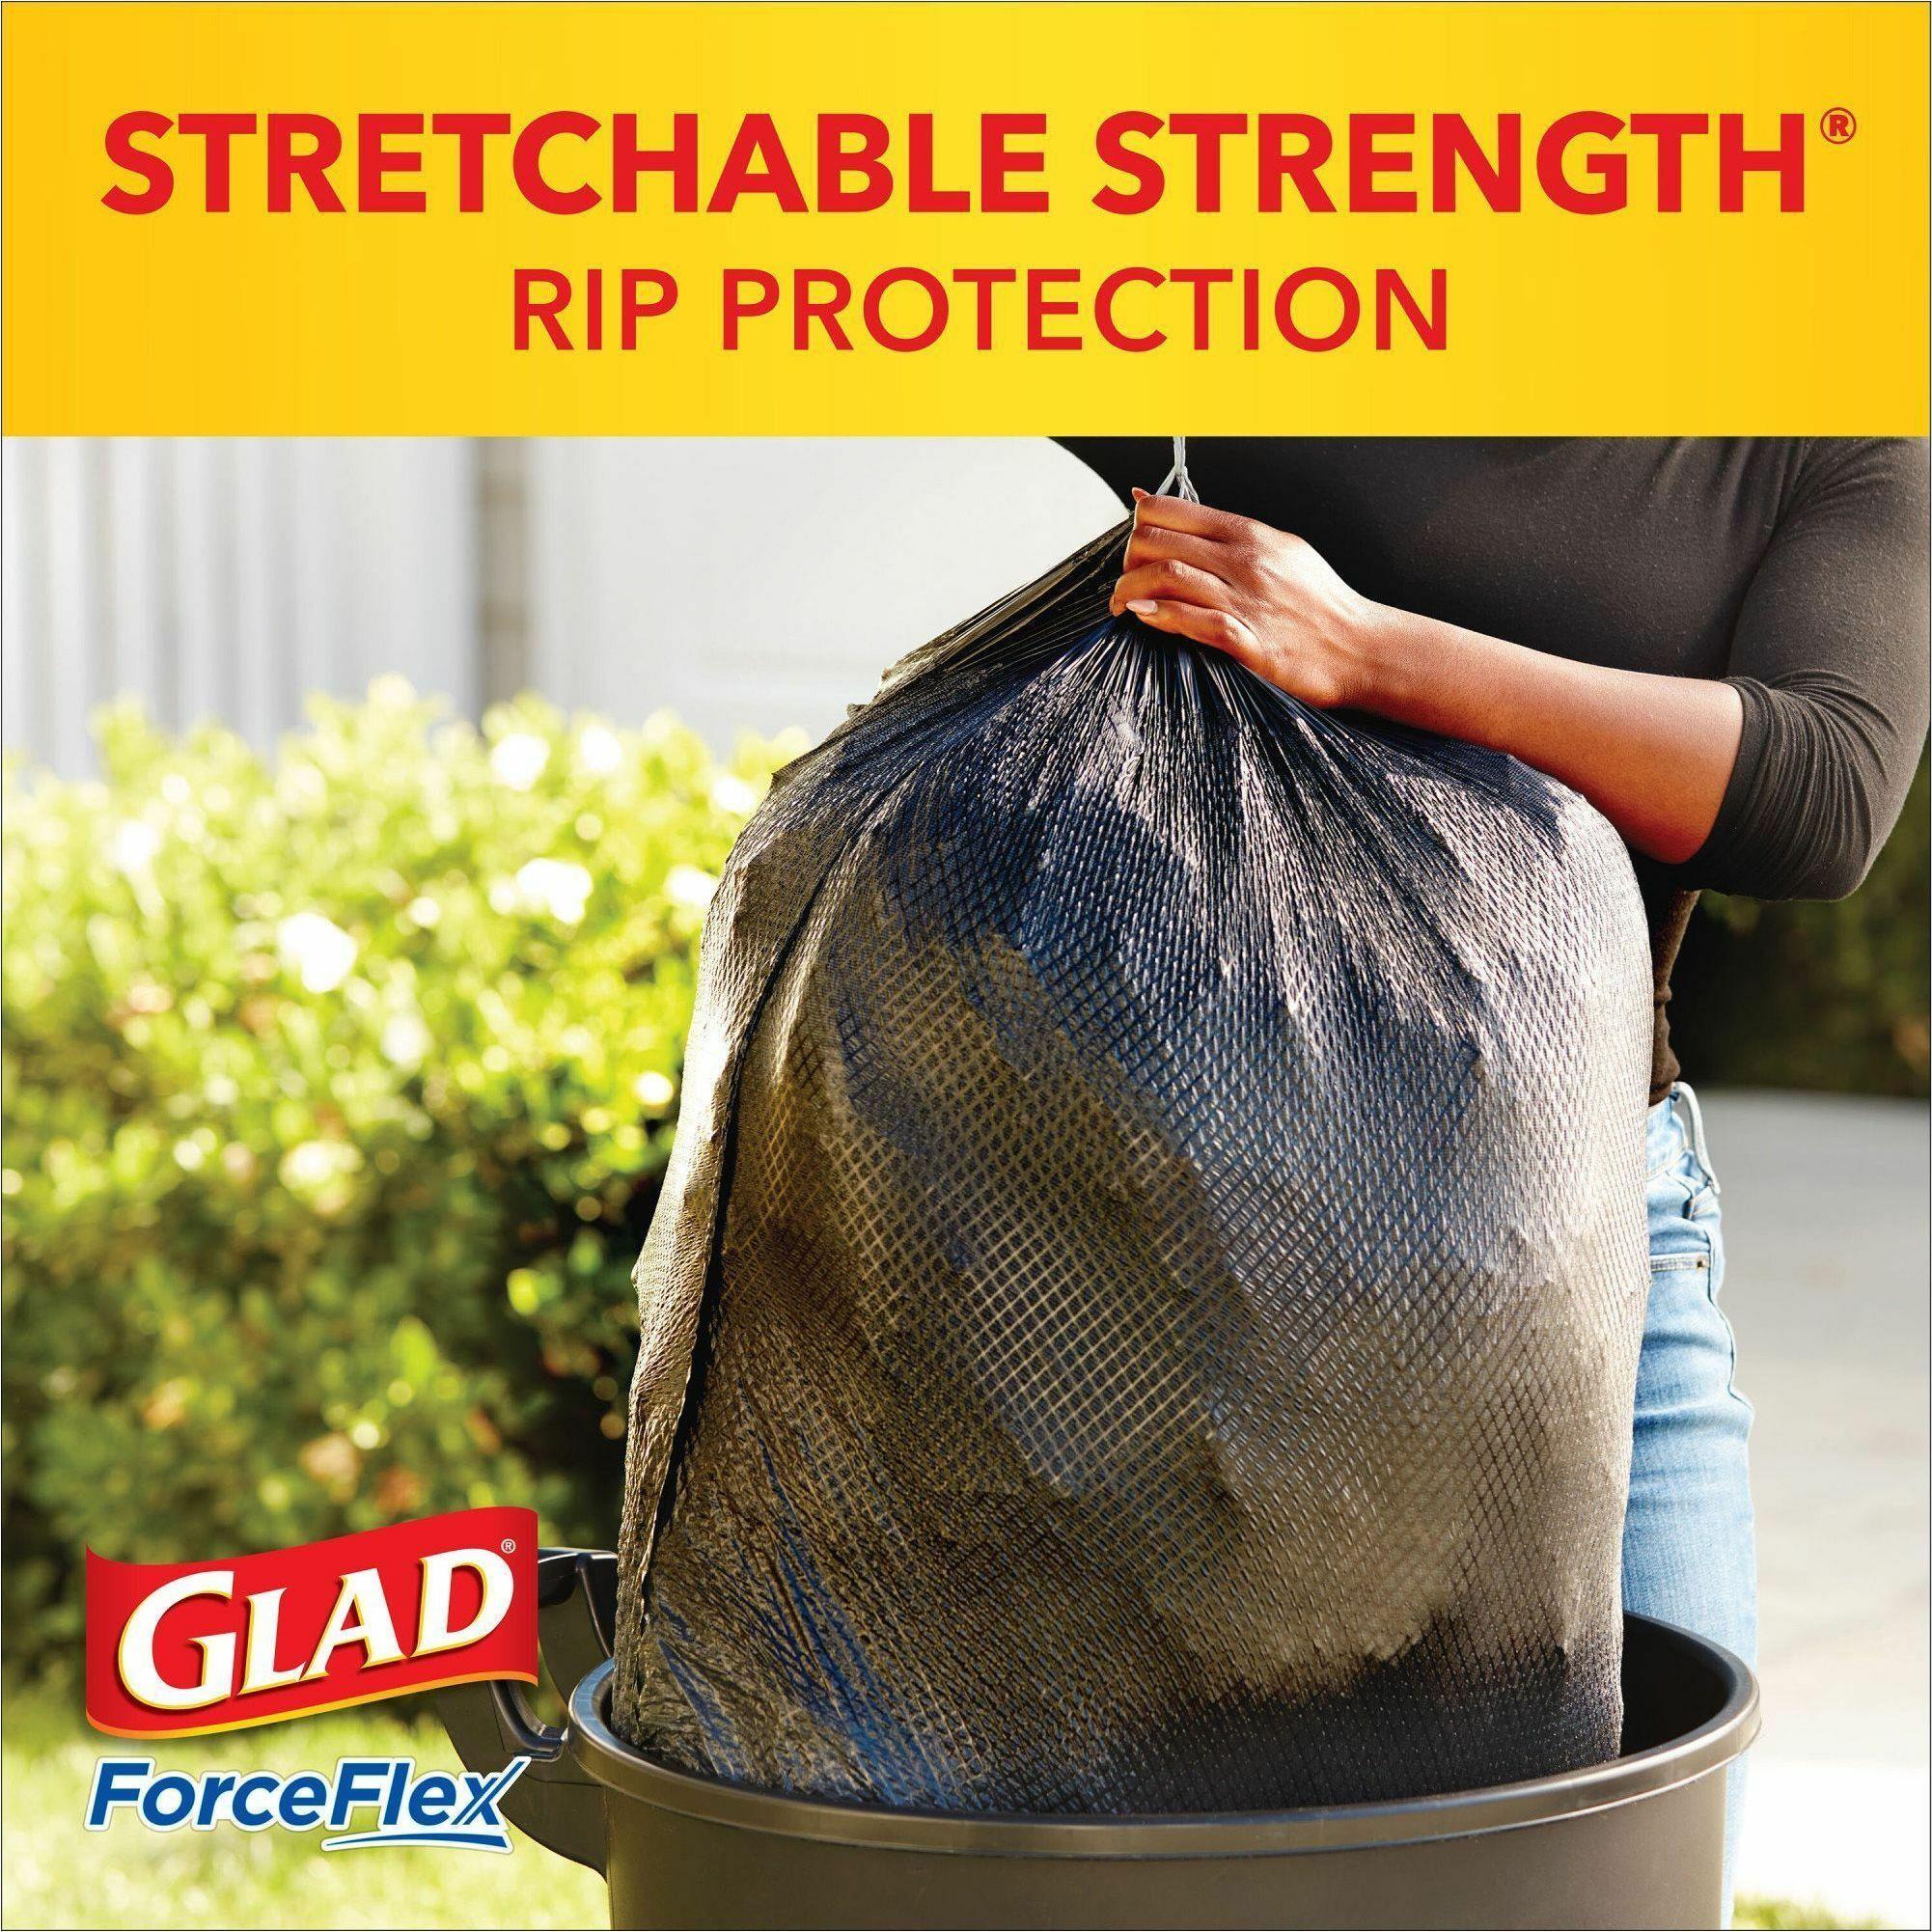 Glad ForceFlexPlus Drawstring Trash Bags 30 Gallons Black 50 Per